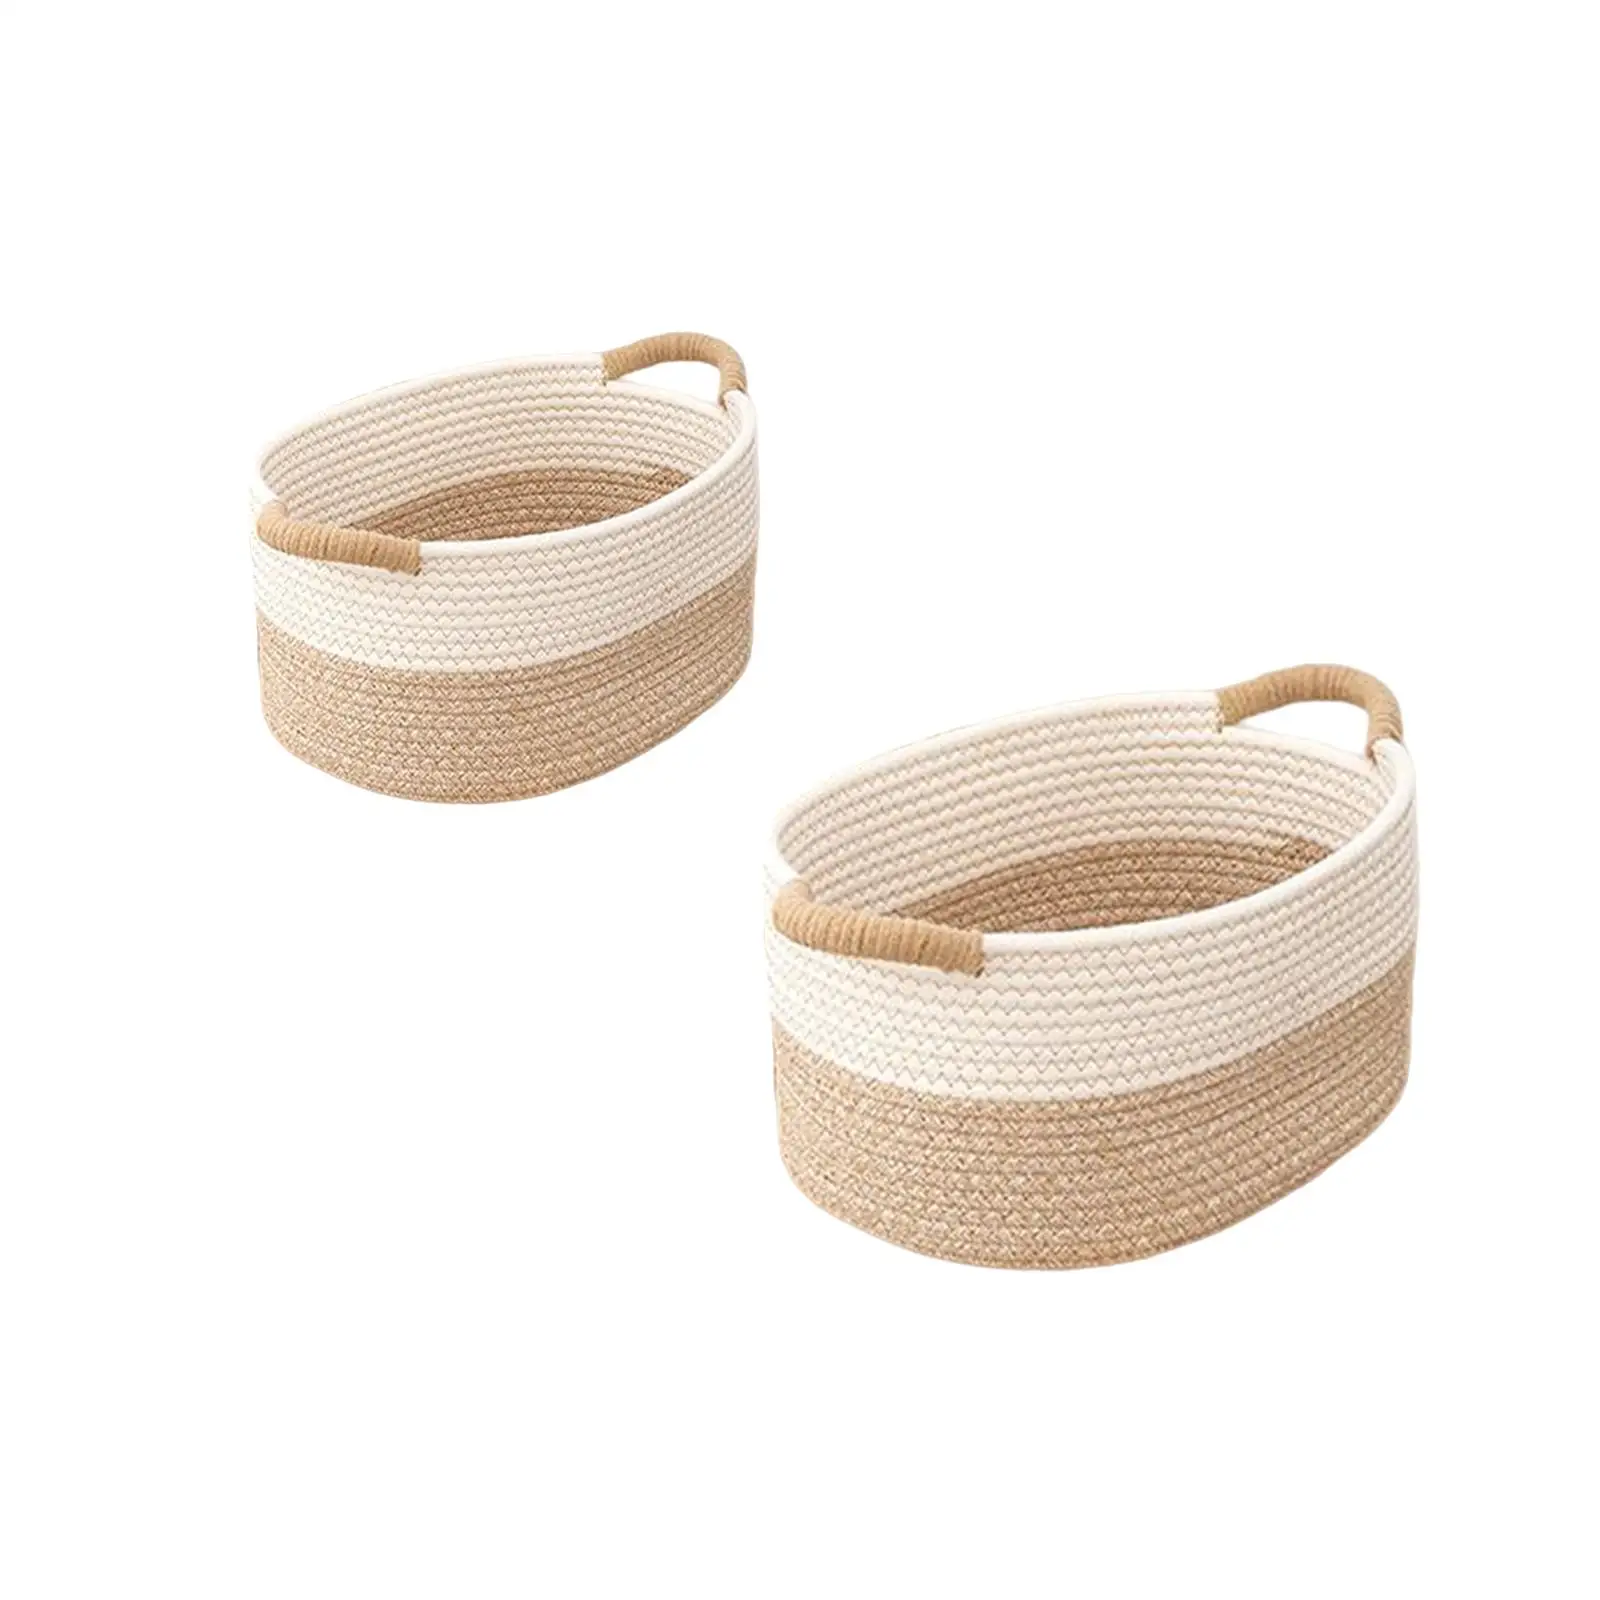 Rope Woven Baskets for Organizing Storage Basket Basket Portable Gift Basket Empty for Bathroom Home Nursery Desktop Books